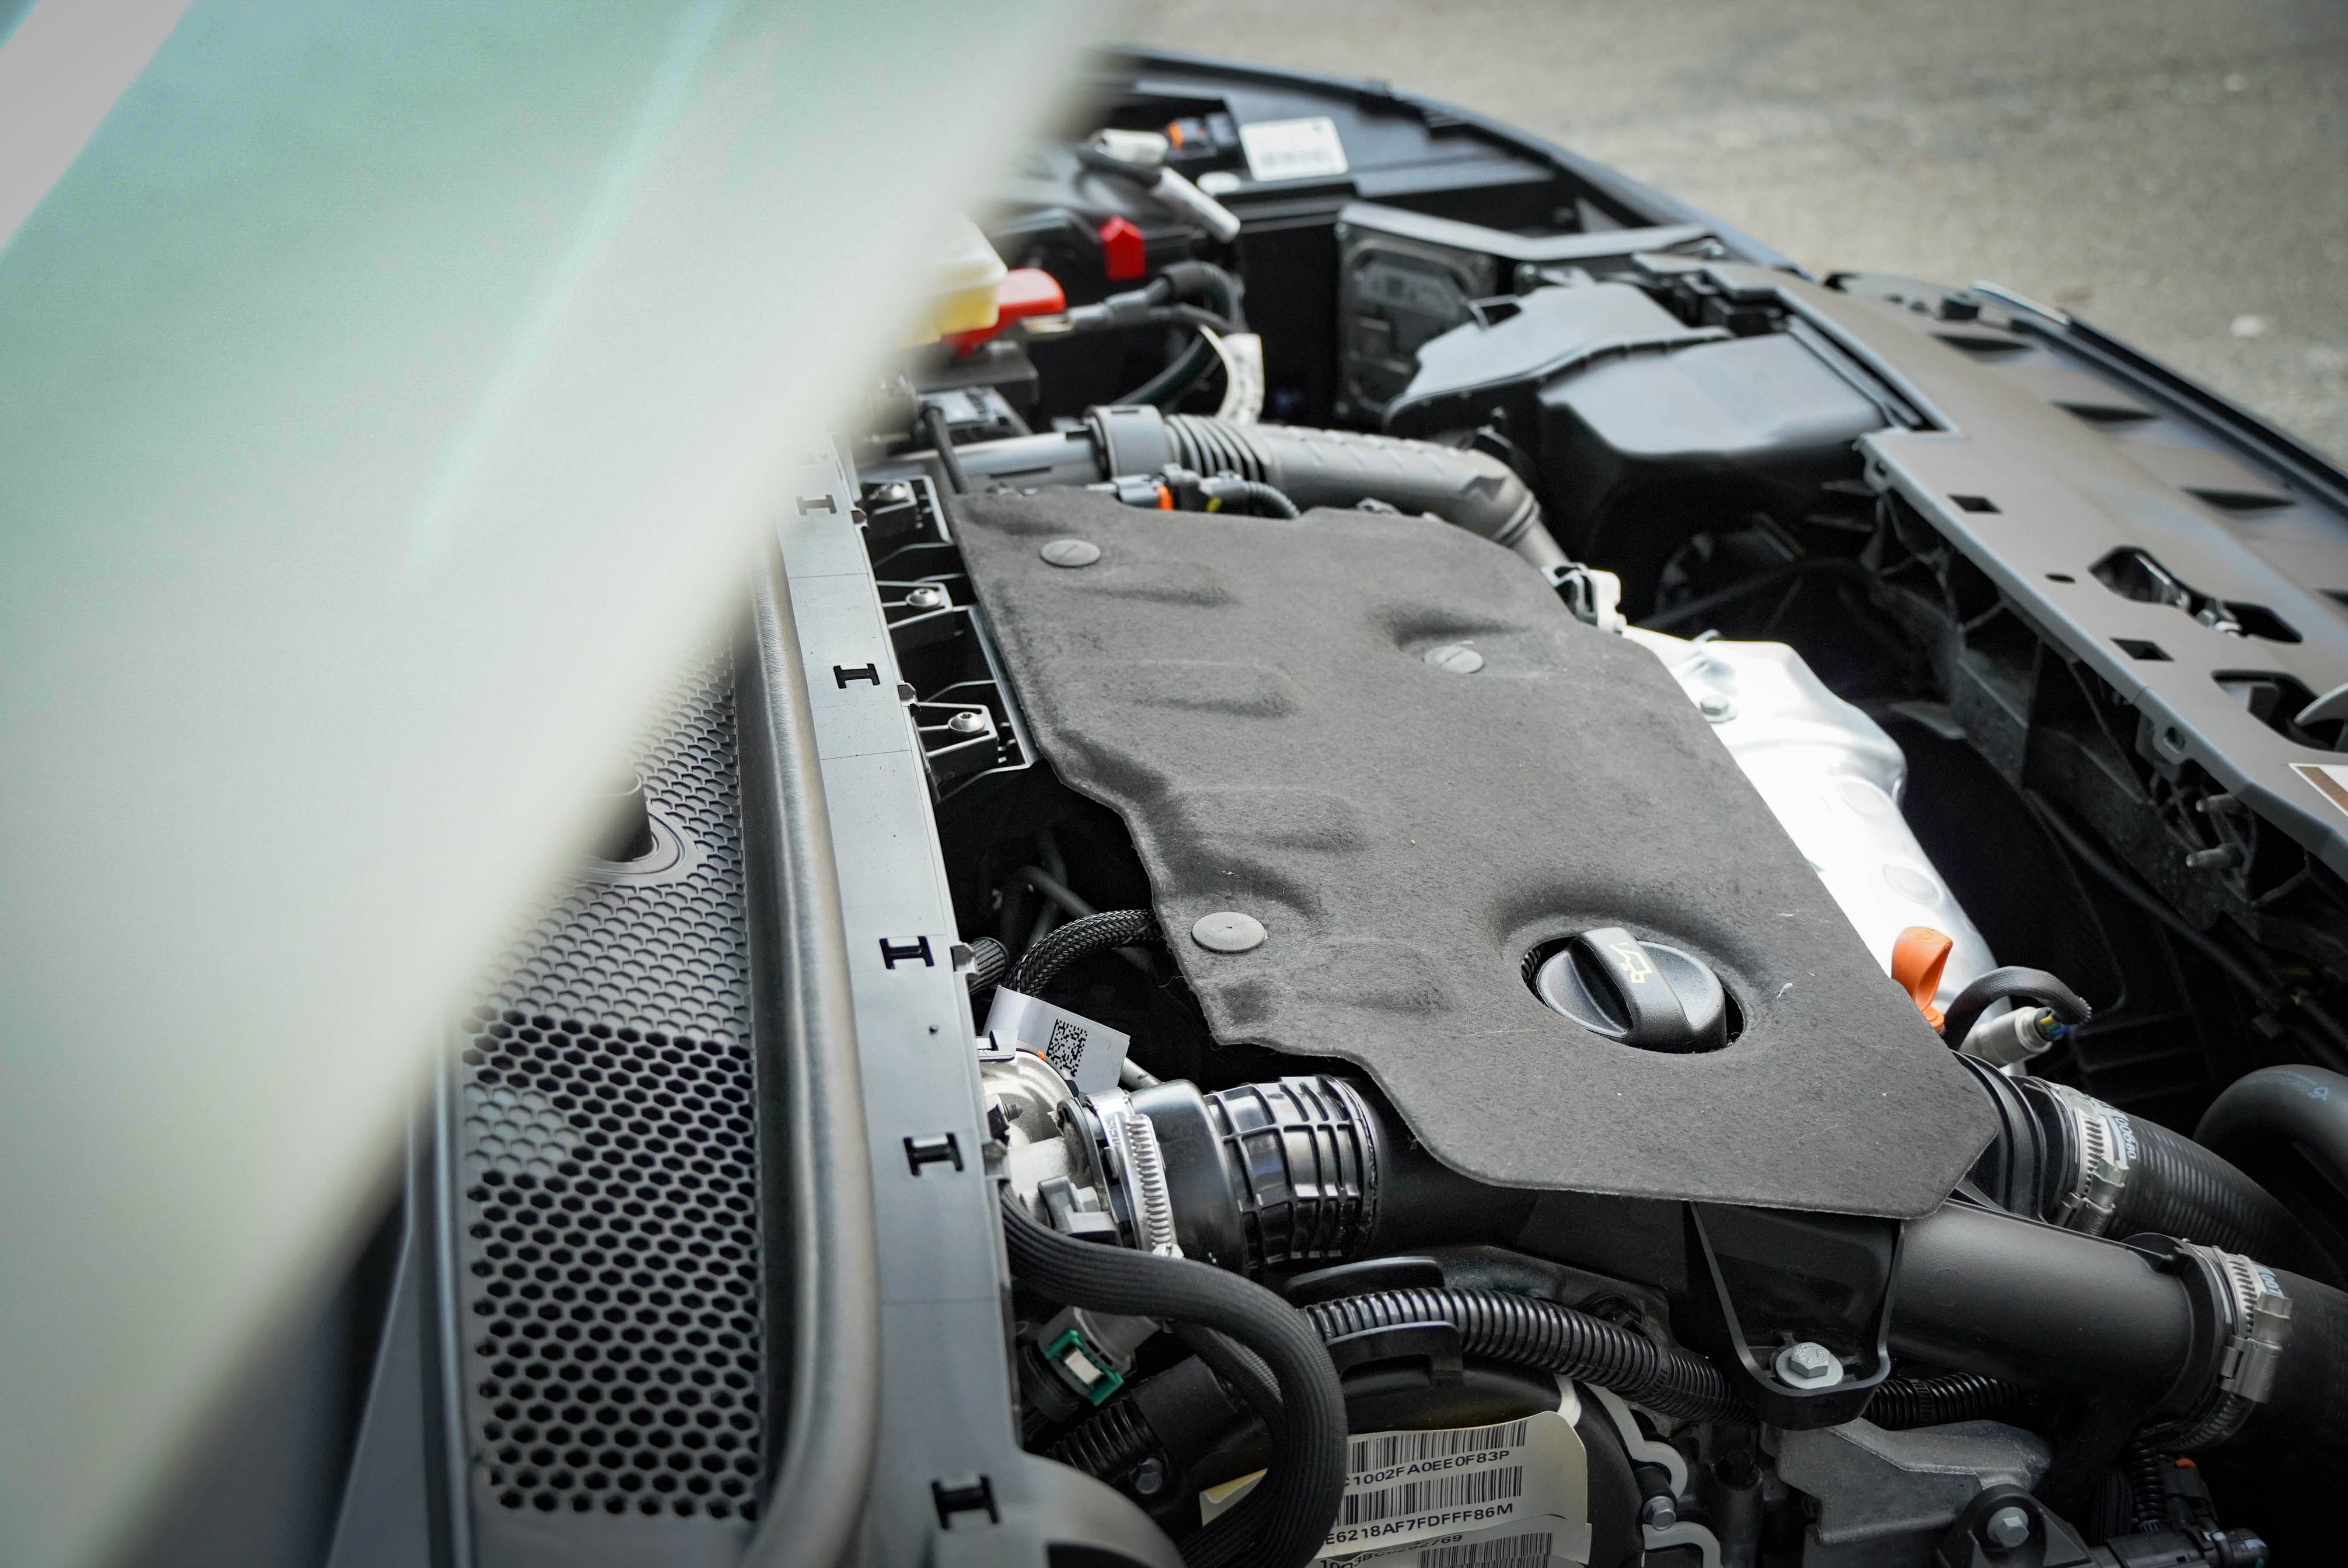 PSA Group 最新 1.5L BlueHDi 渦輪增壓柴油引擎馬力為 130 匹馬力、扭力為 300 牛頓米，官方油耗數據為 22.3 km/l。